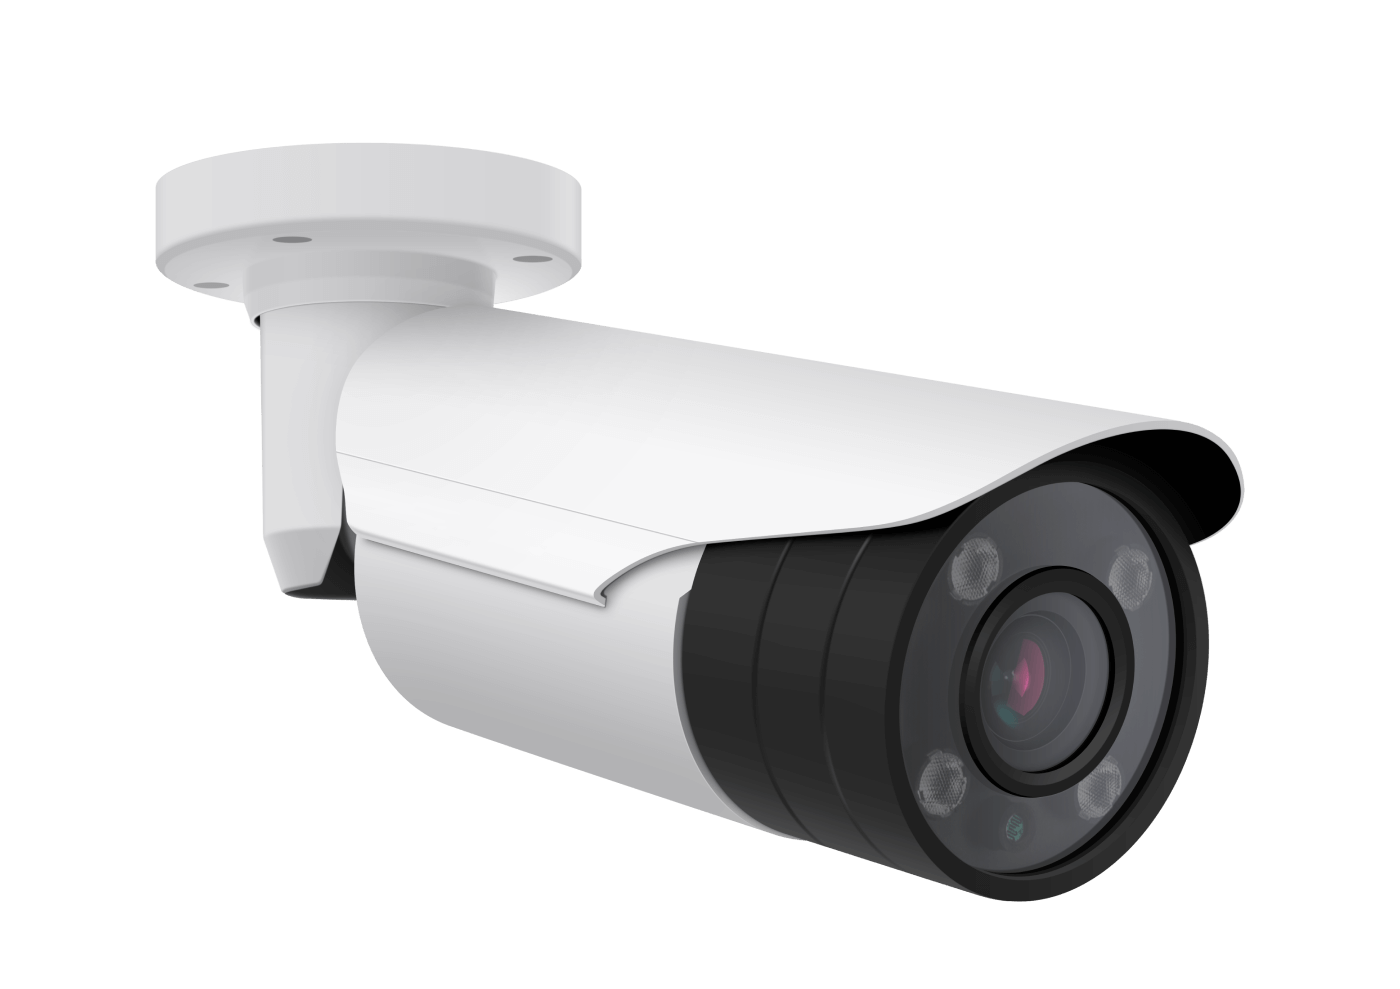 Ox zung camera footage. Камера видеонаблюдения JSH-x200ir. Камера видеонаблюдения (26.40.33.110-00006). Камера наблюдения AHD-108 Smart Vision. N6603 IP-видеокамера.